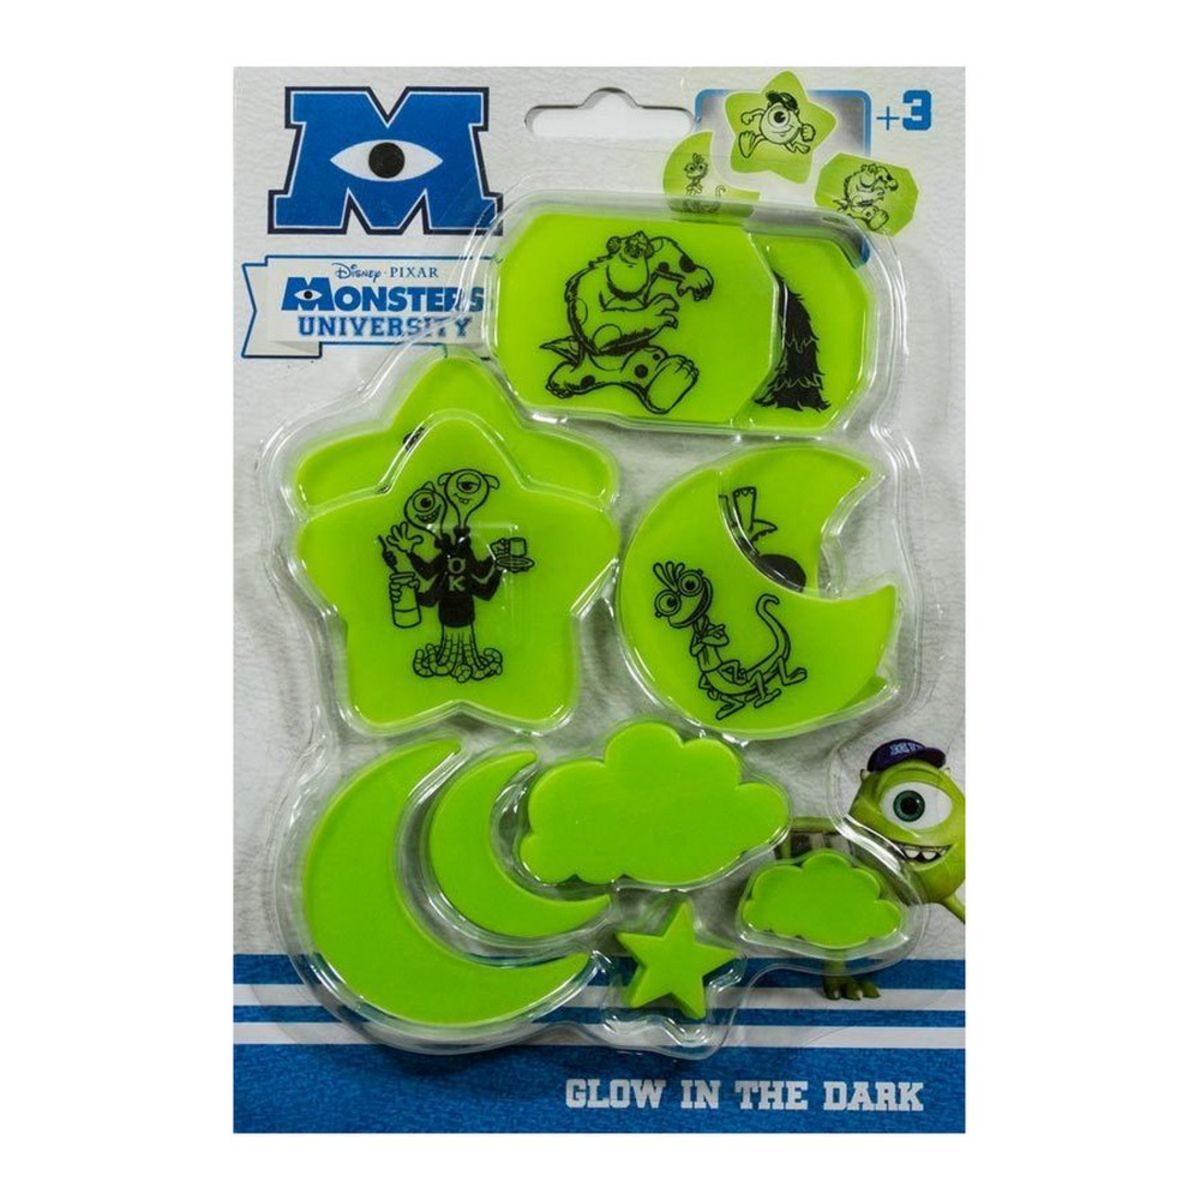  30 stickers Monstres Academy Phosphorescents Glow in the dark Disney veilleuse lumière enfant